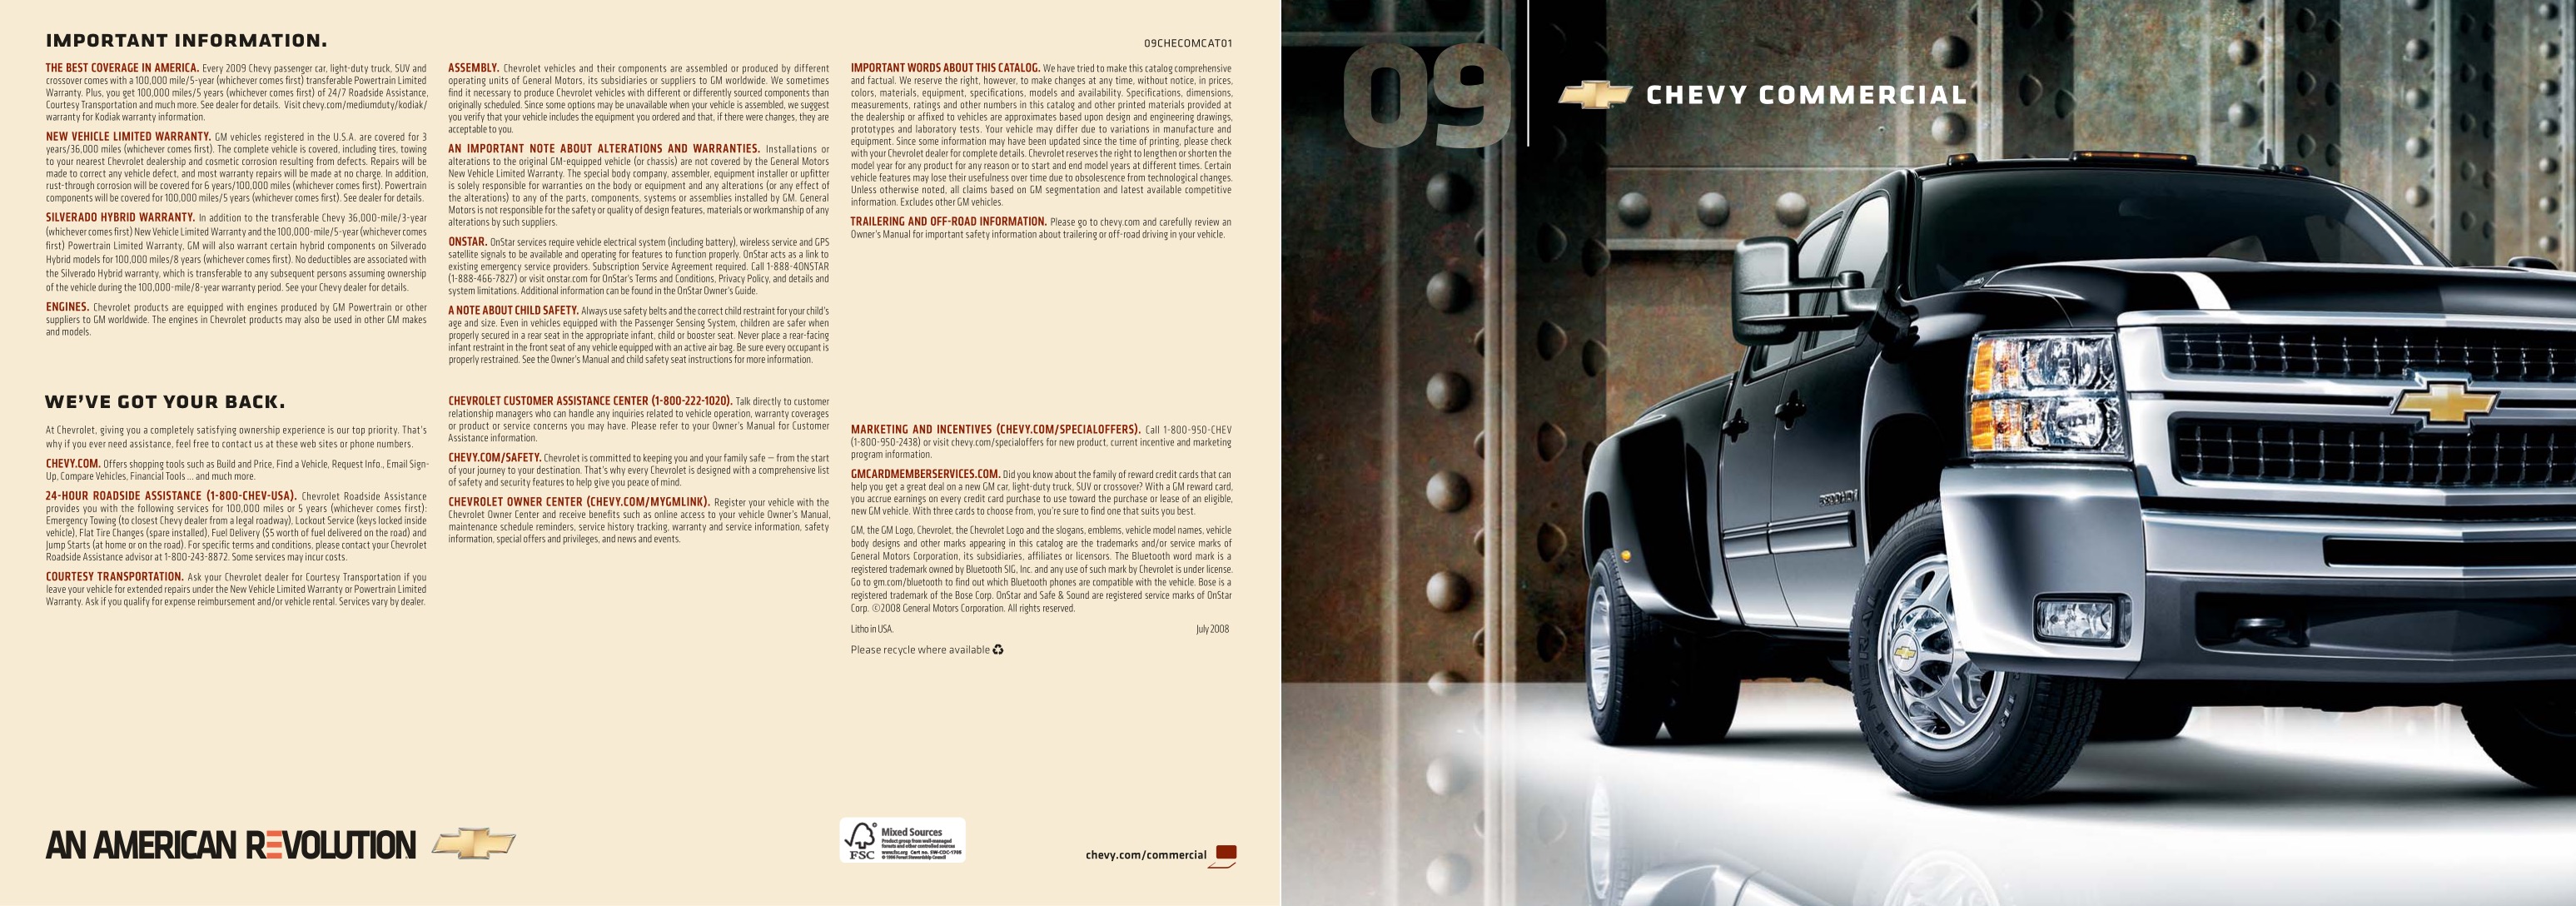 2009 Chevrolet Express Brochure